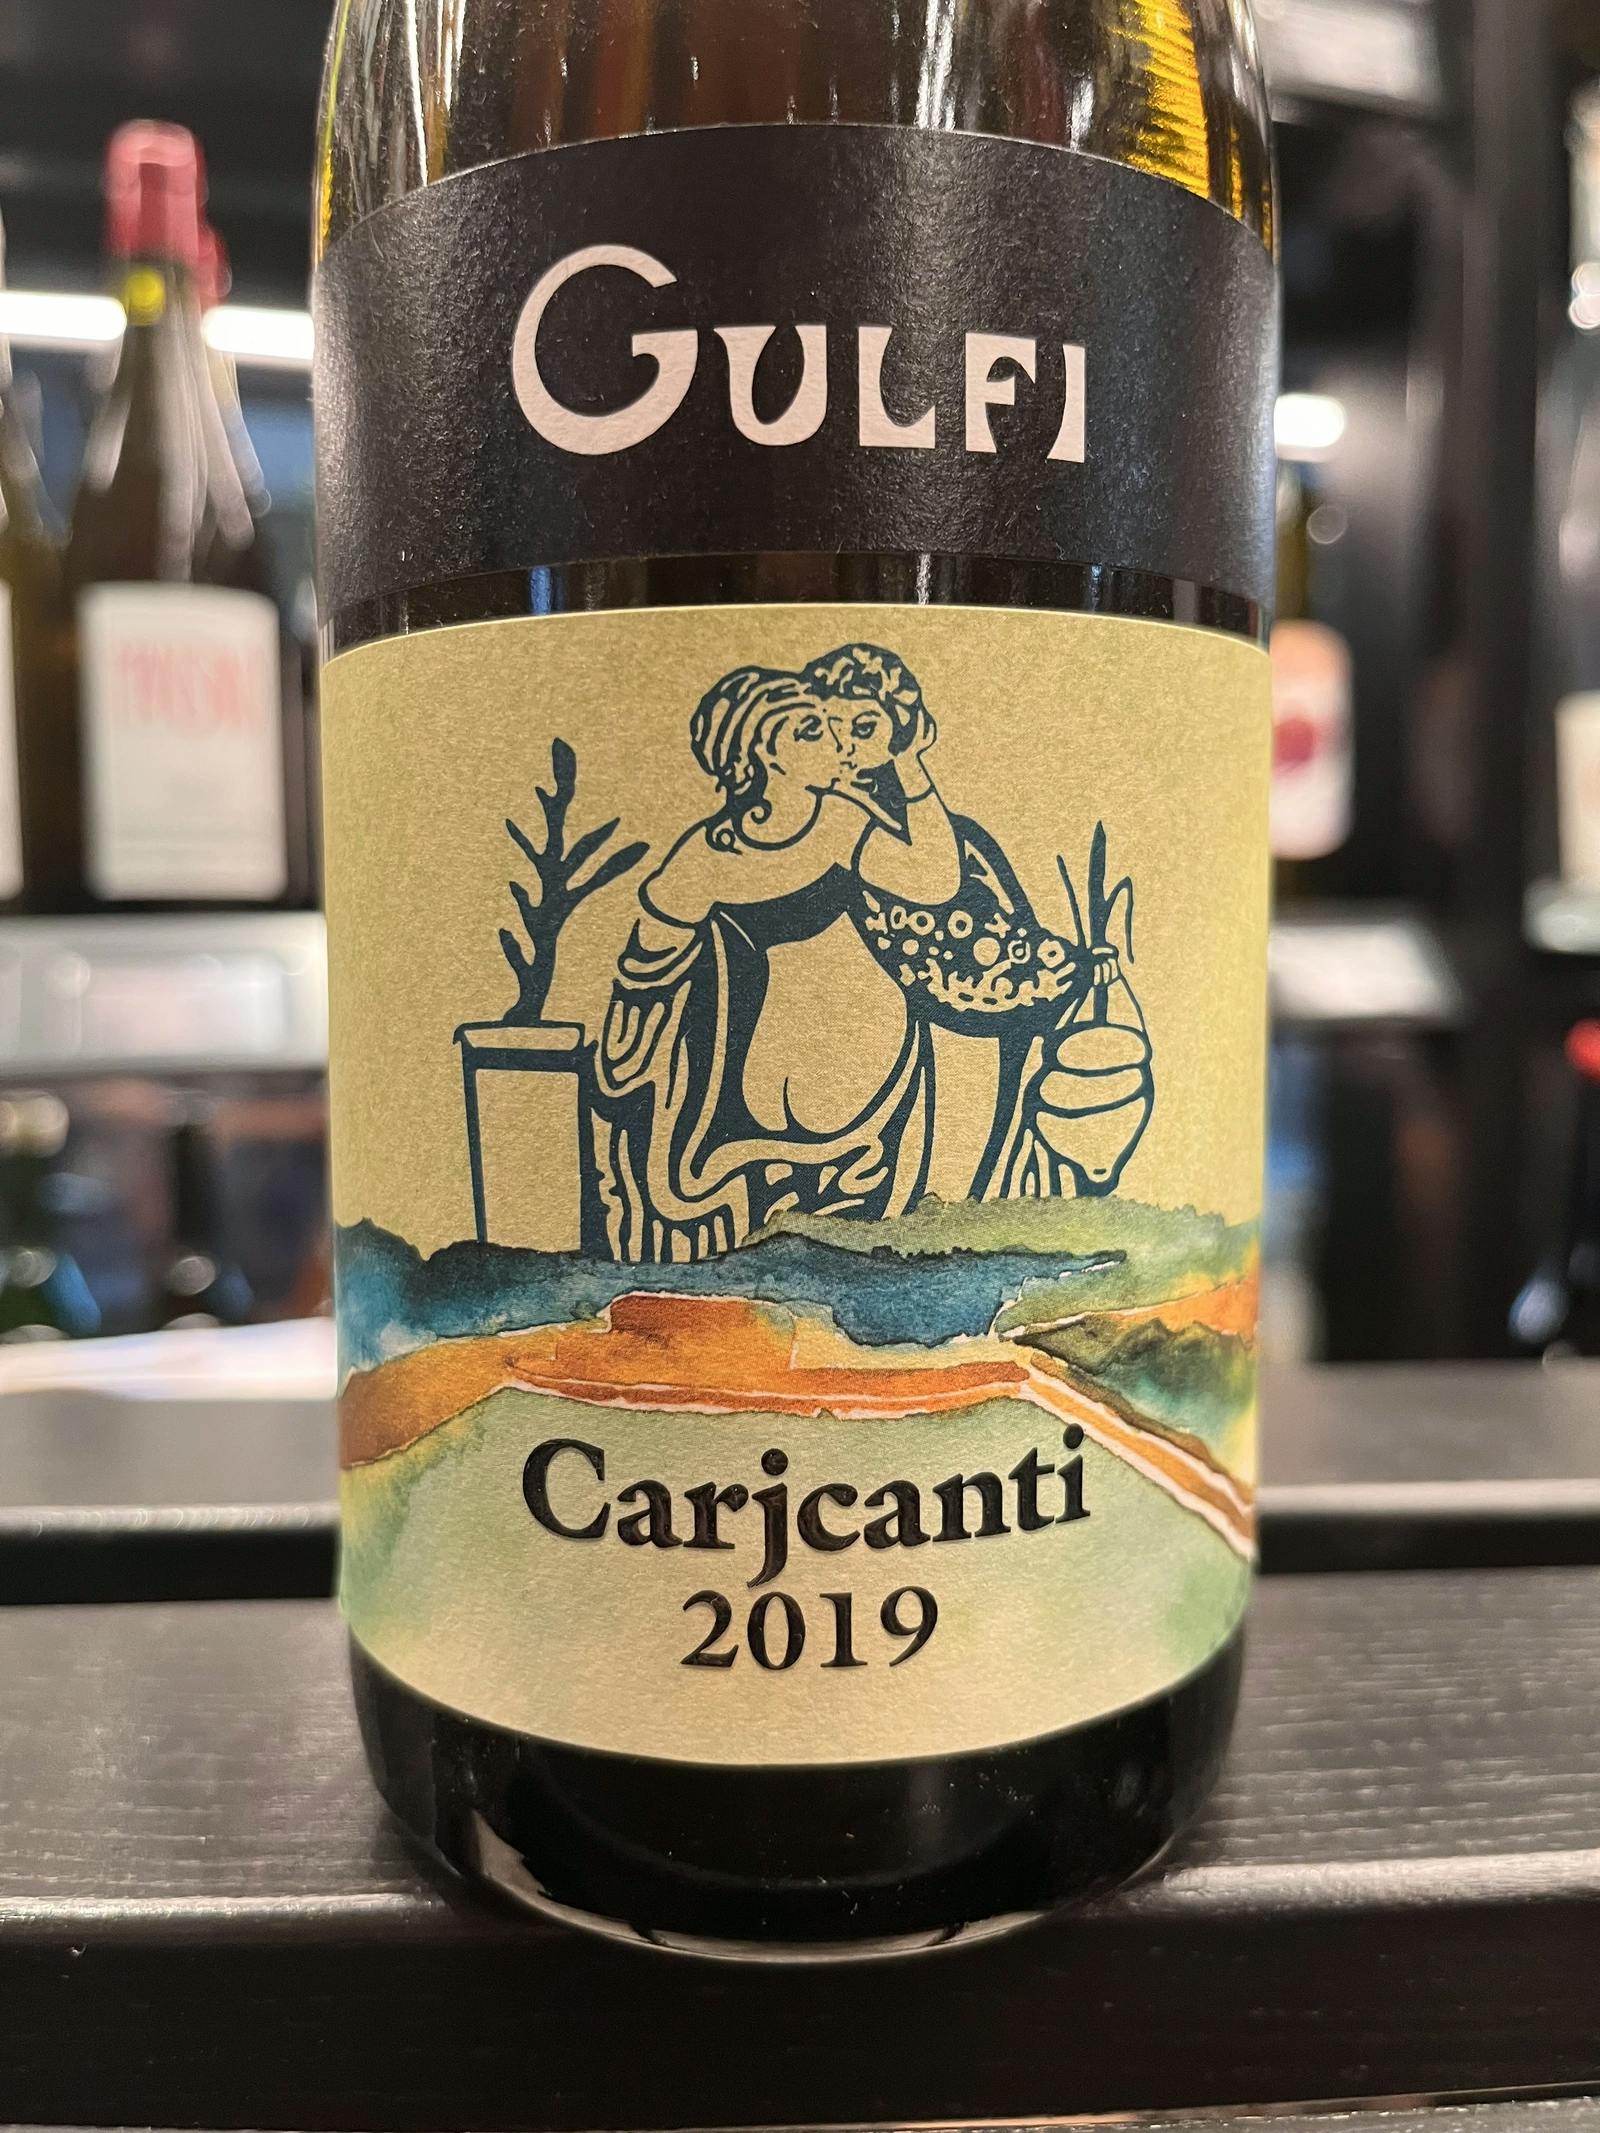 Gulfi Carjcanti 2019